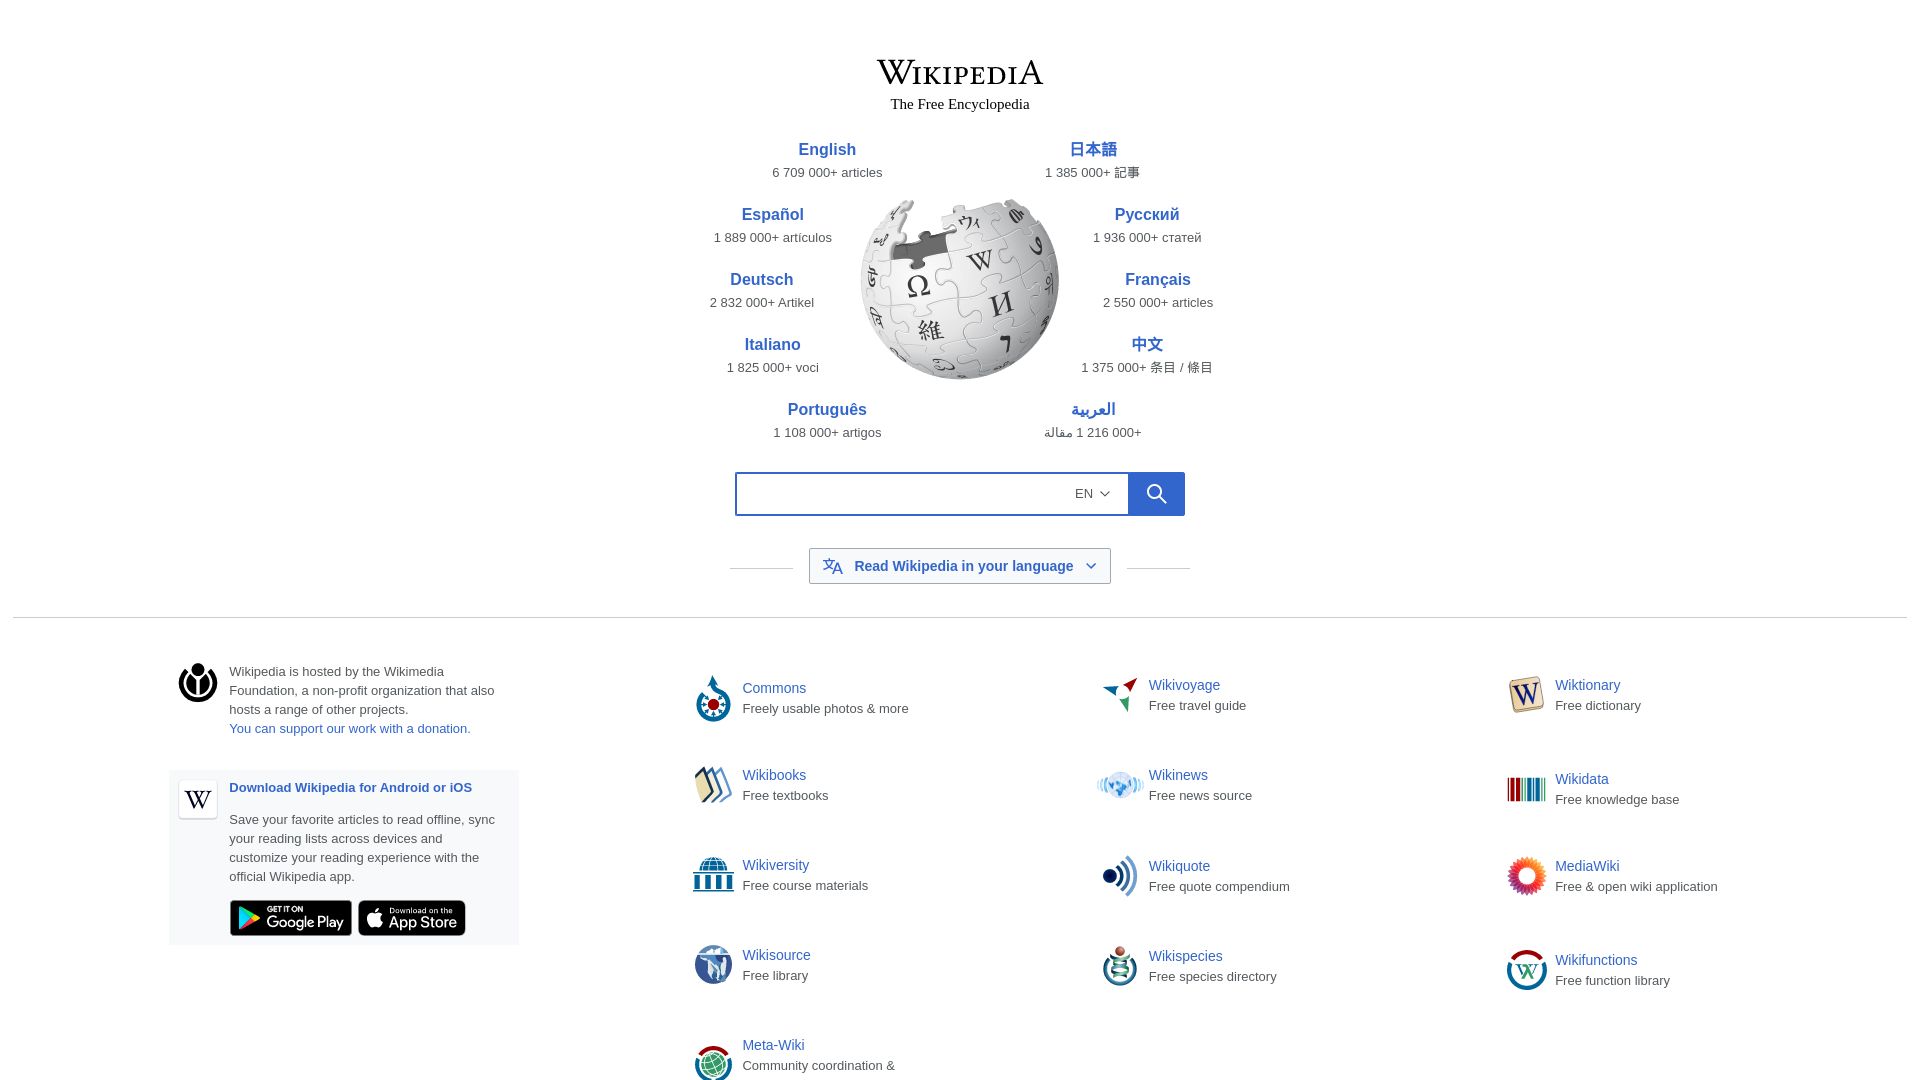 Website status wikipedia.com is   ONLINE